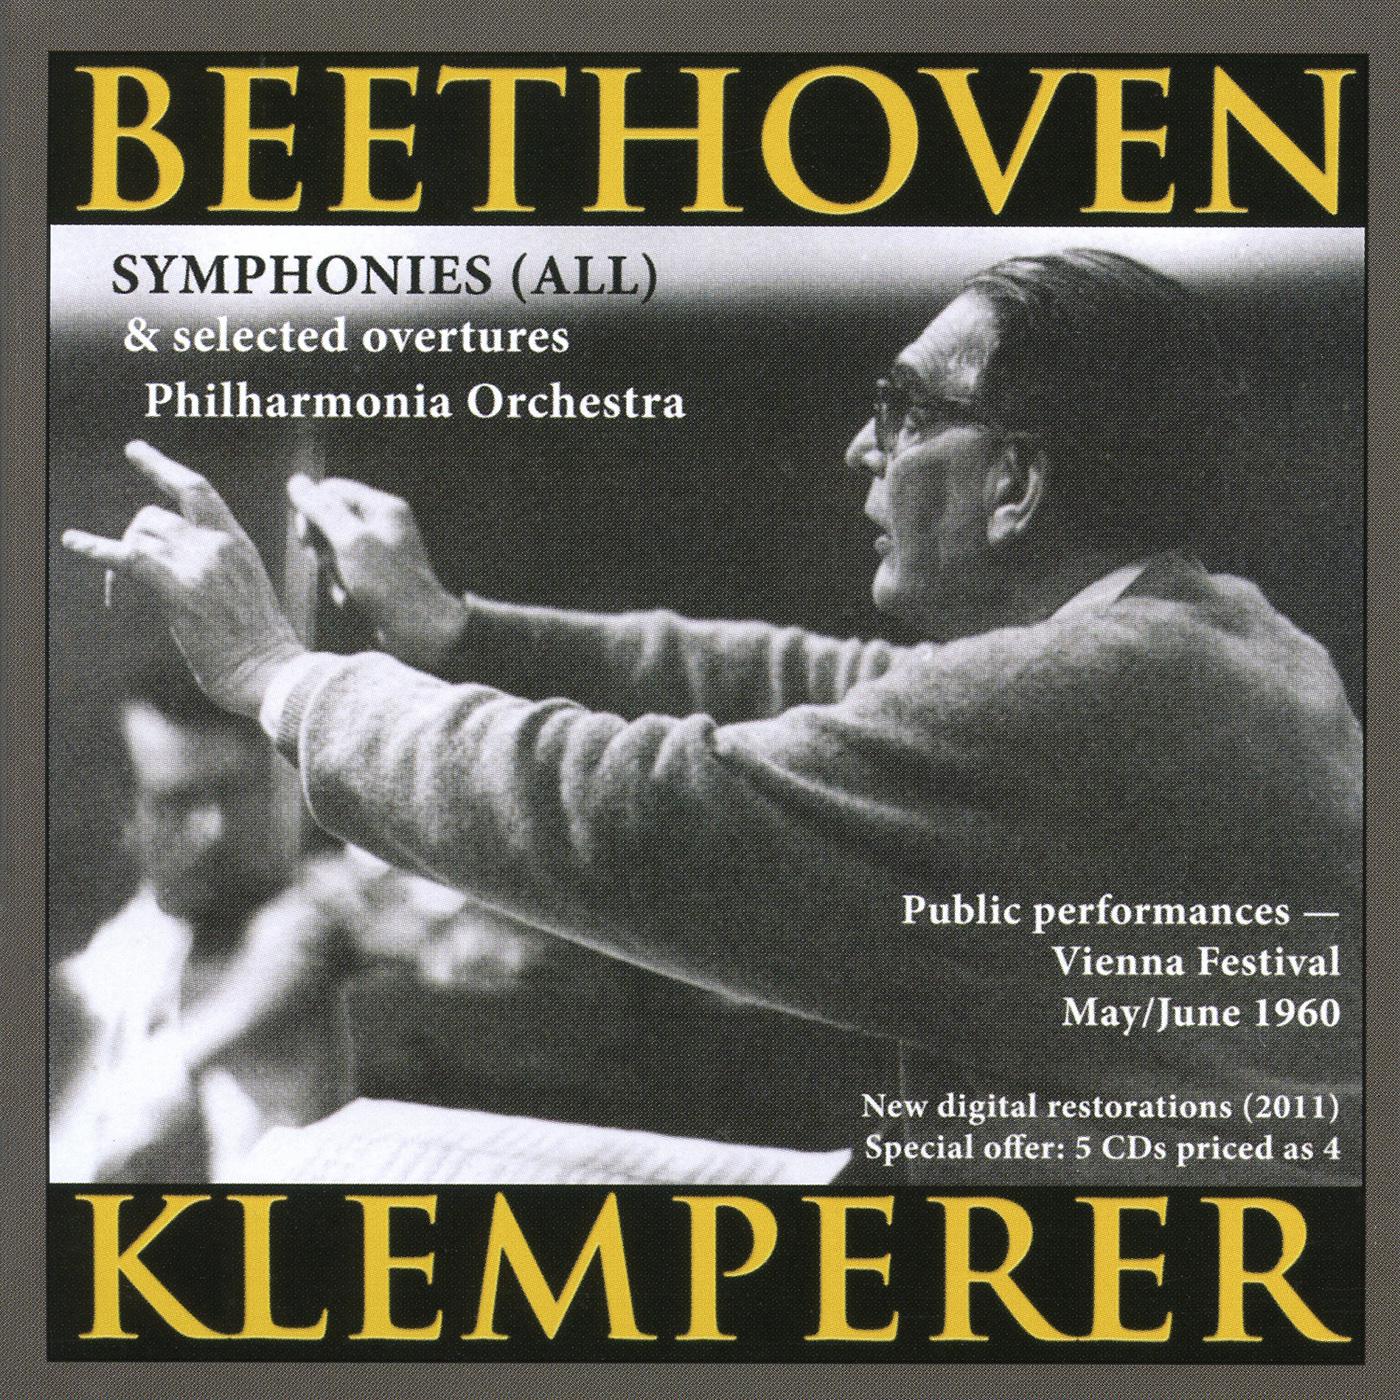 BEETHOVEN, L. van: Symphonies Nos. 1-9 / Overtures (Philharmonia Orchestra, Klemperer) (1960)